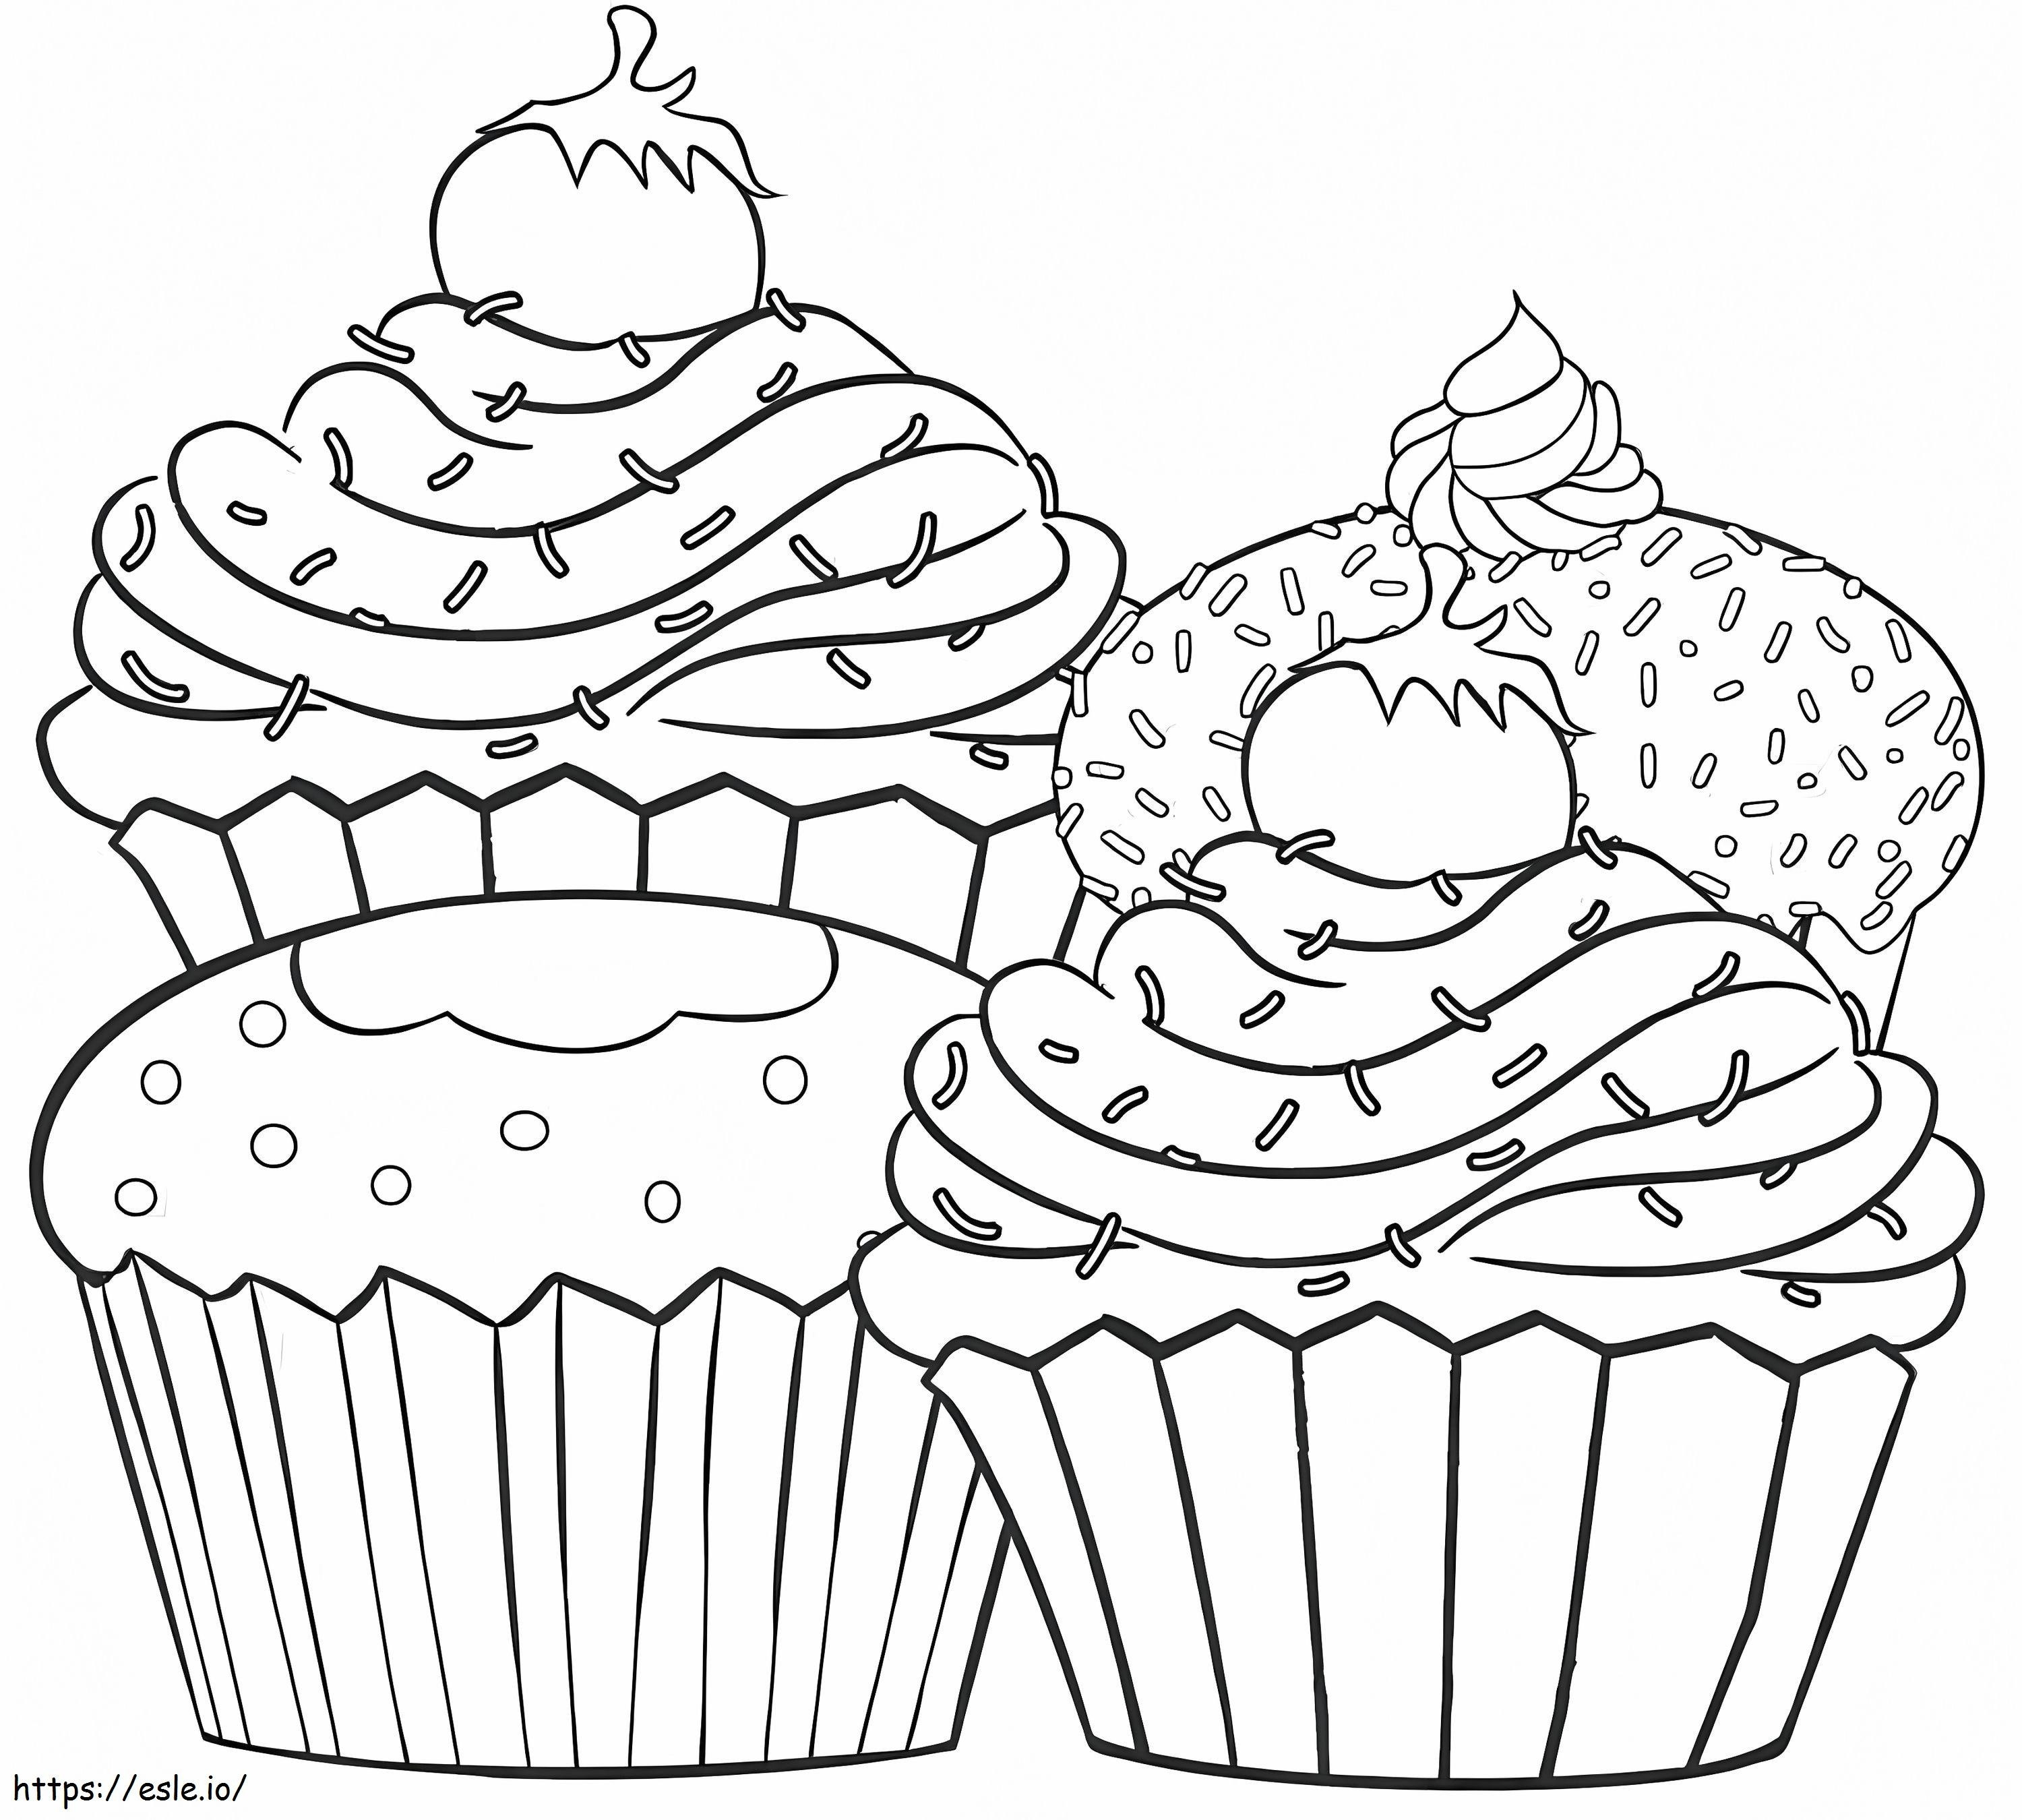 Quattro cupcakes da colorare